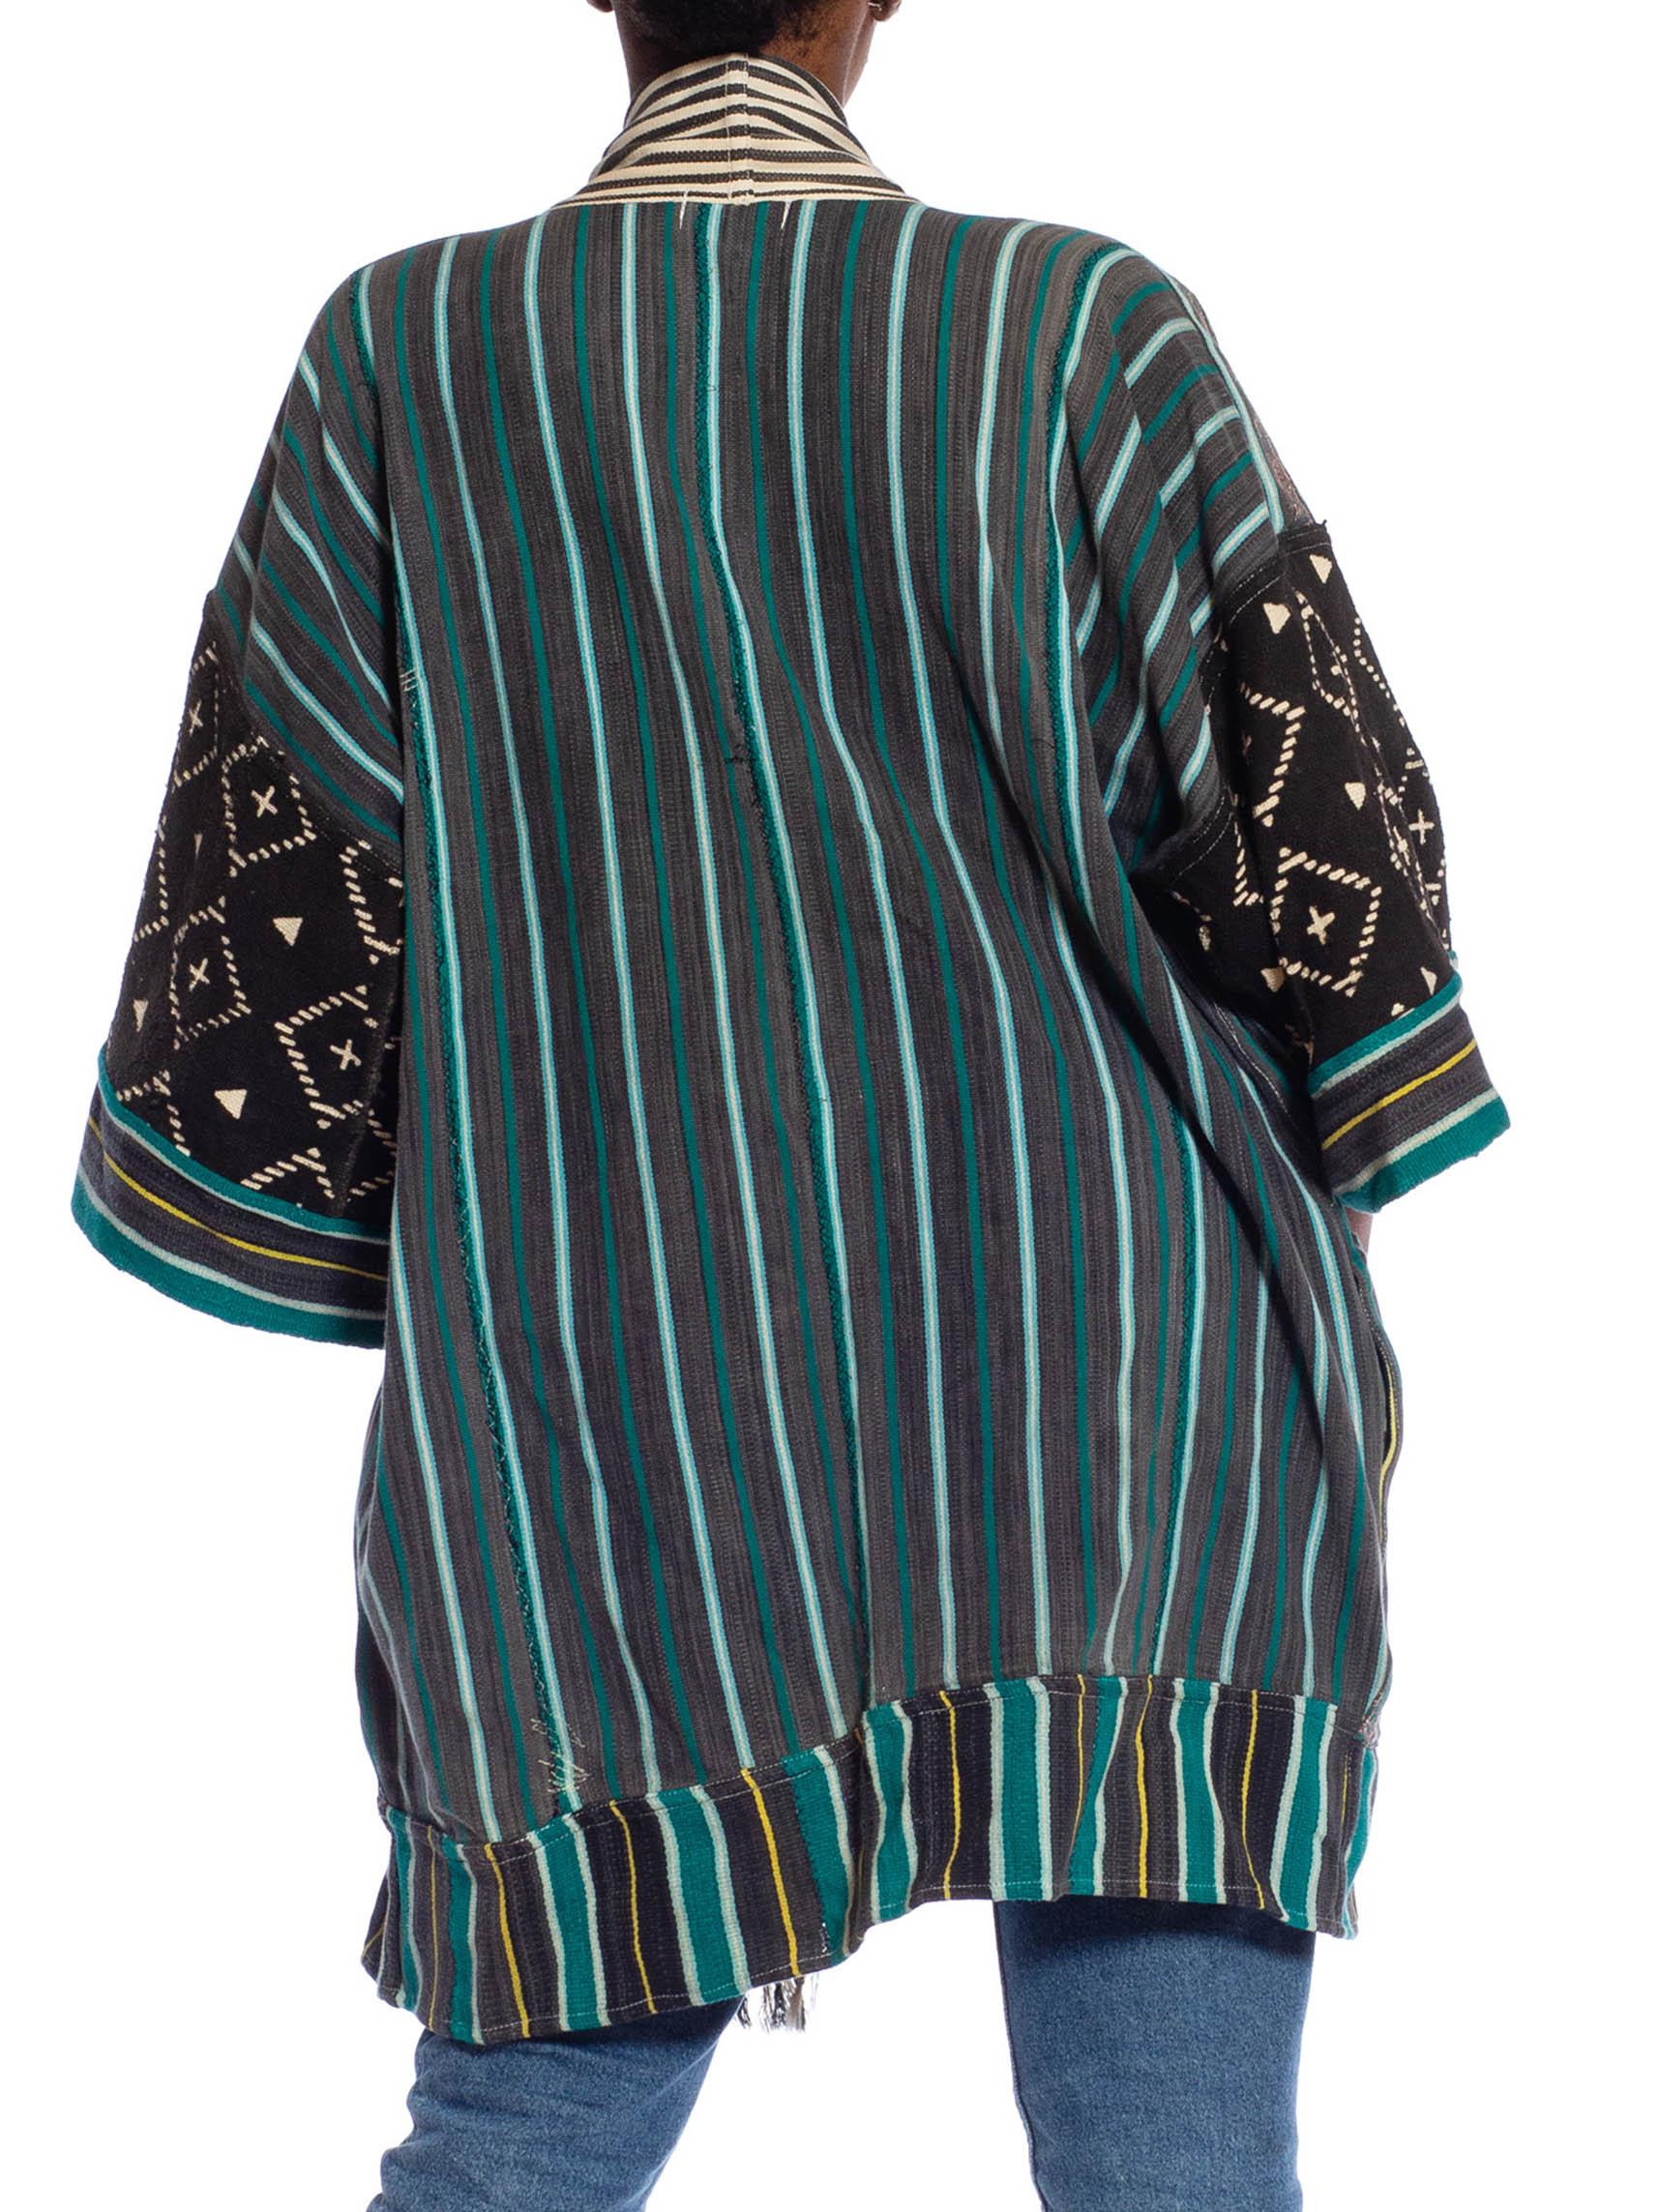 MORPHEW COLLECTION Black, Teal & Grey African Cotton Indigo Stripe Black Tie-Dy 1